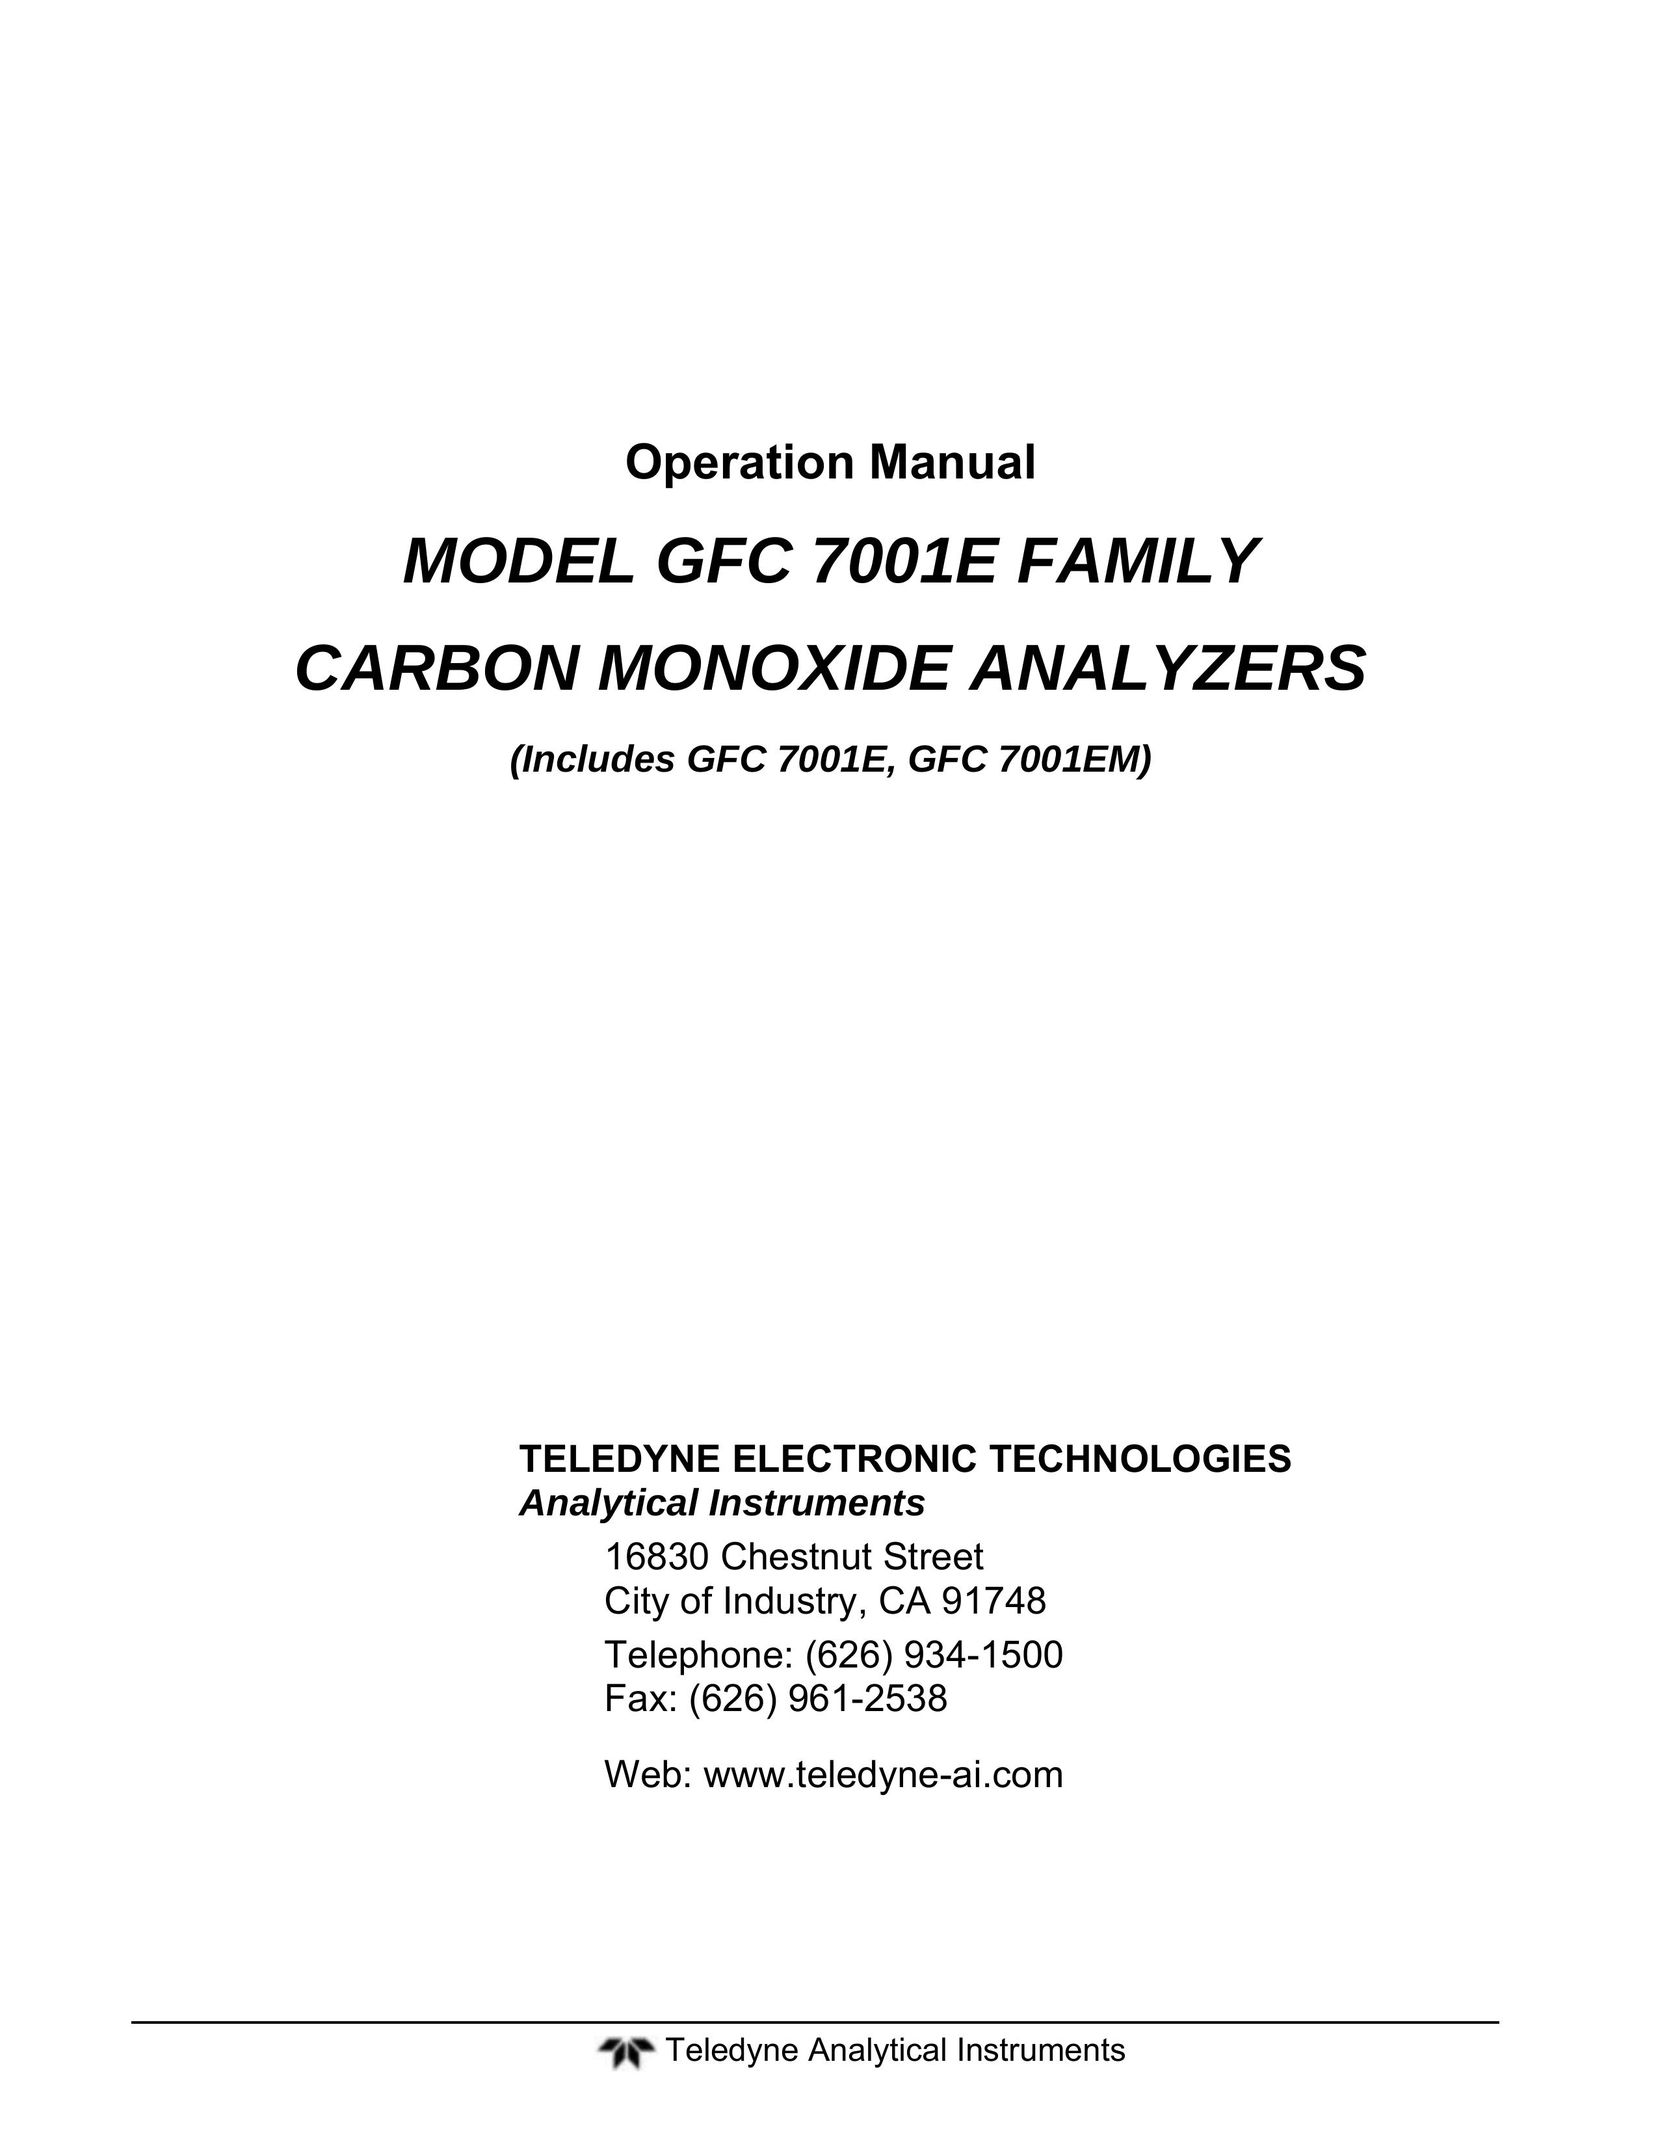 Teledyne GFC 7001E Carbon Monoxide Alarm User Manual